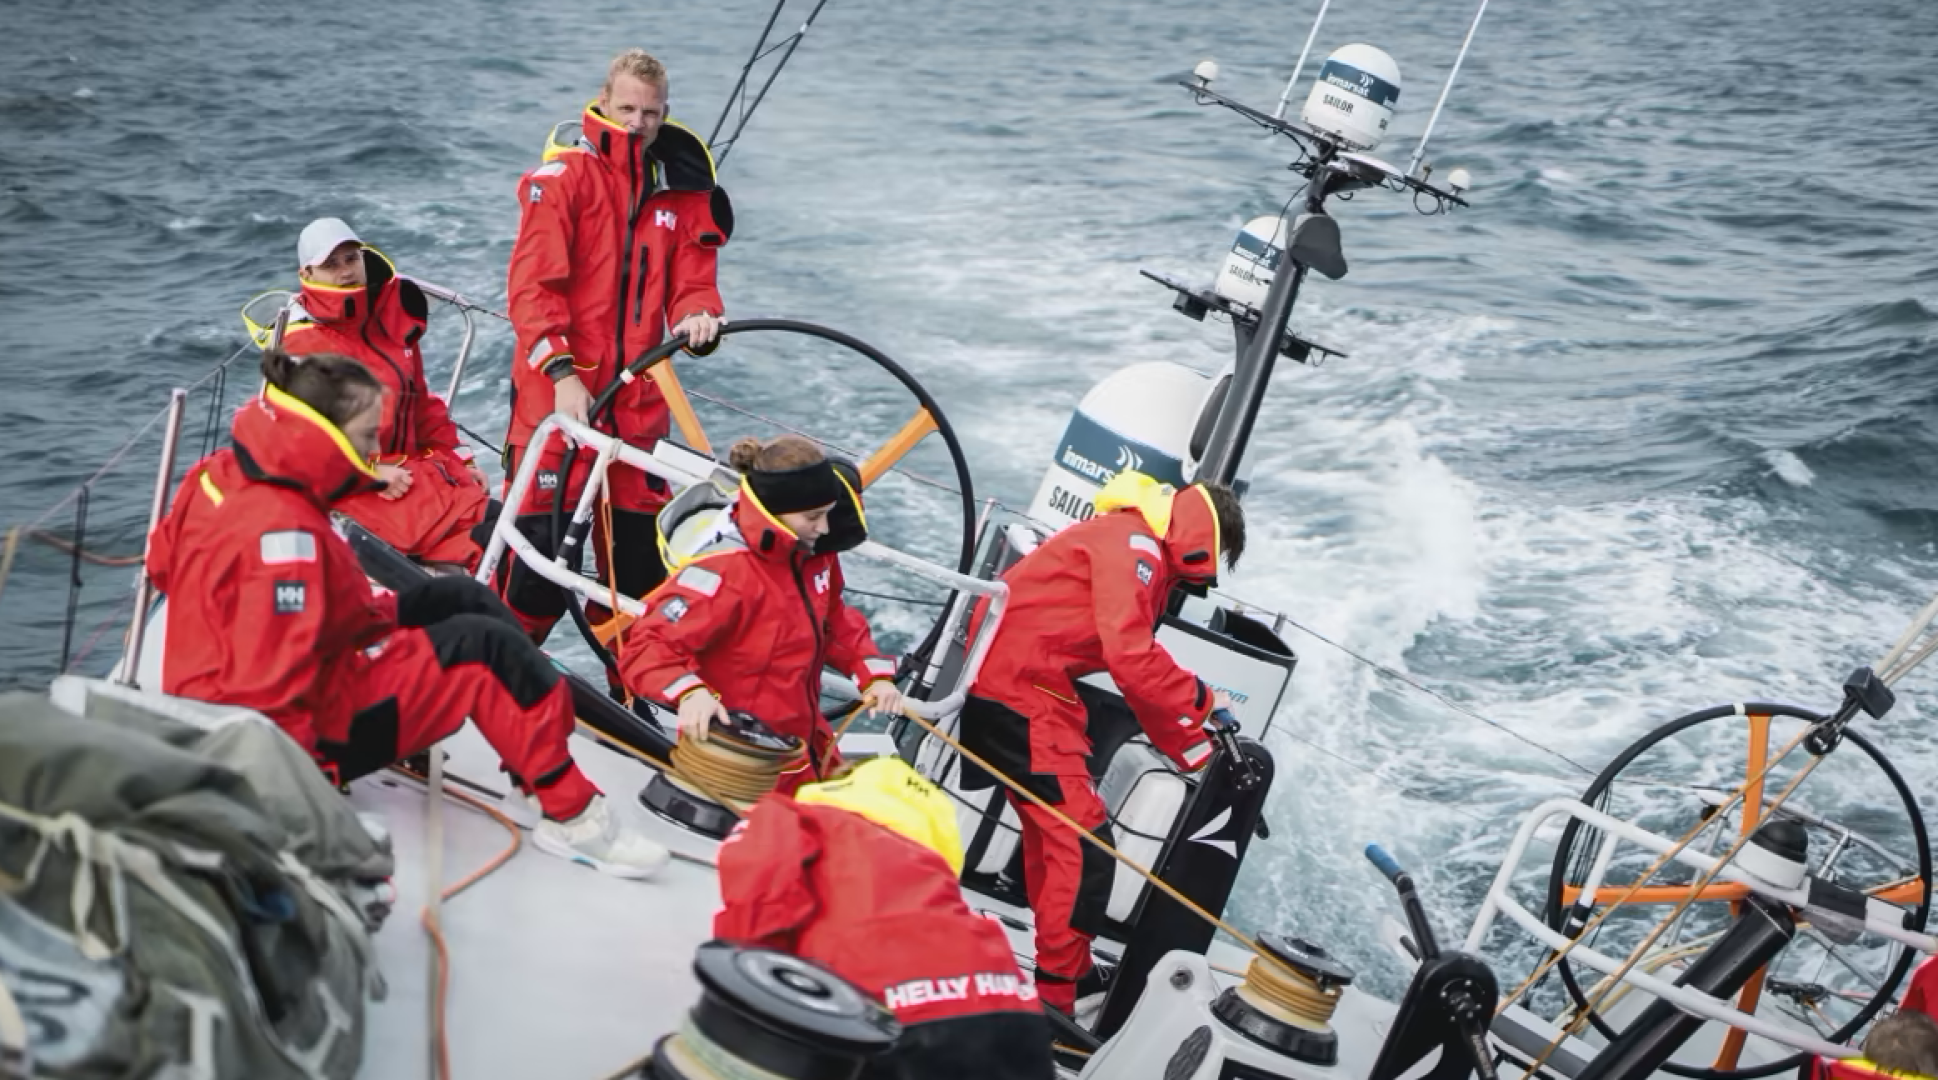 Austrian Ocean Racing powered by Team Genova is racing with Inmarsat connectivity © Stefan Leitner